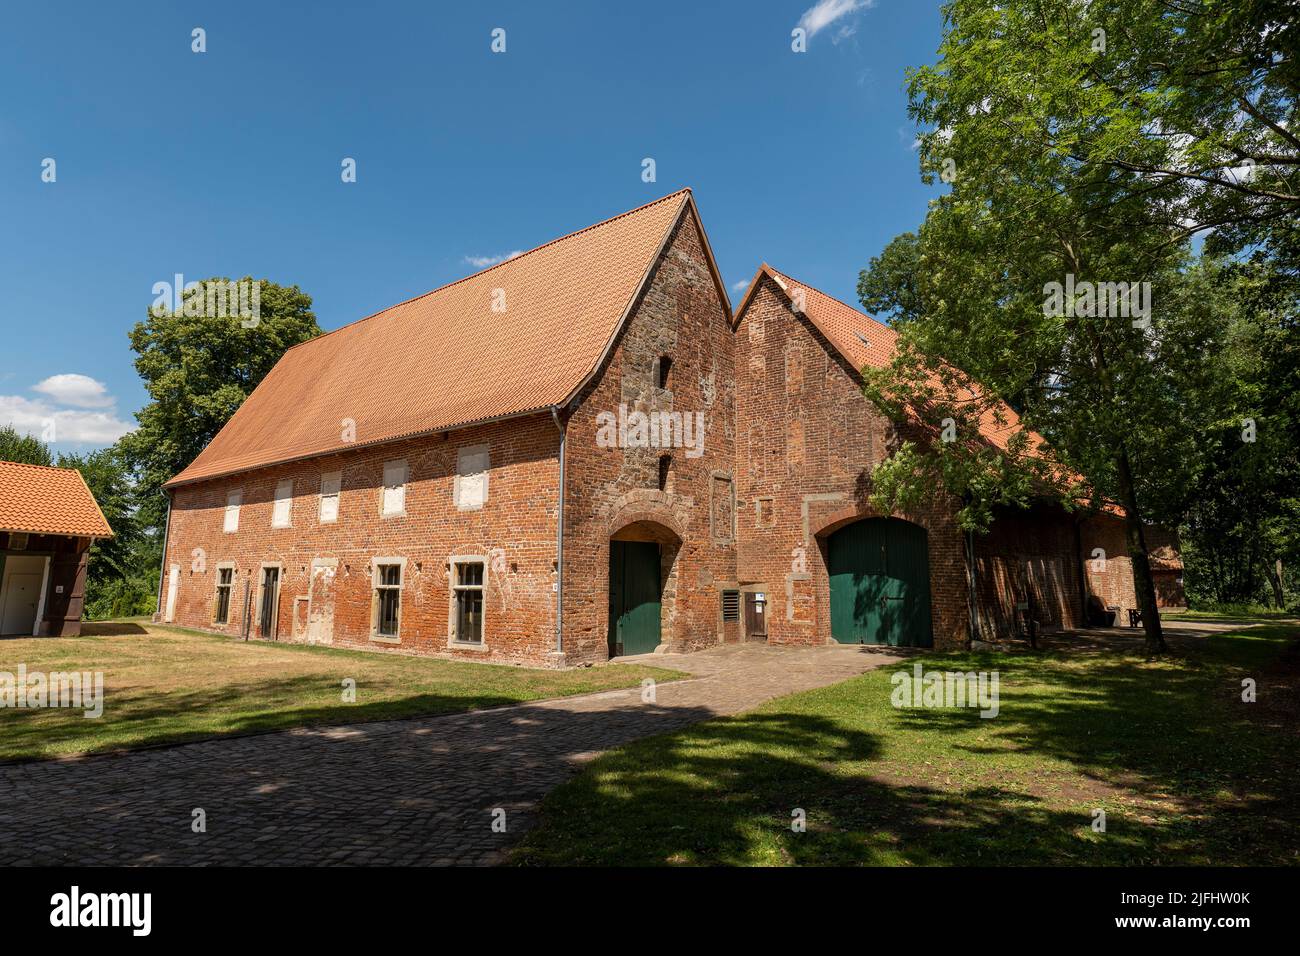 Monastery of Schinna near Stolzenau in Lower Saxony. Founded in 1148. Stock Photo